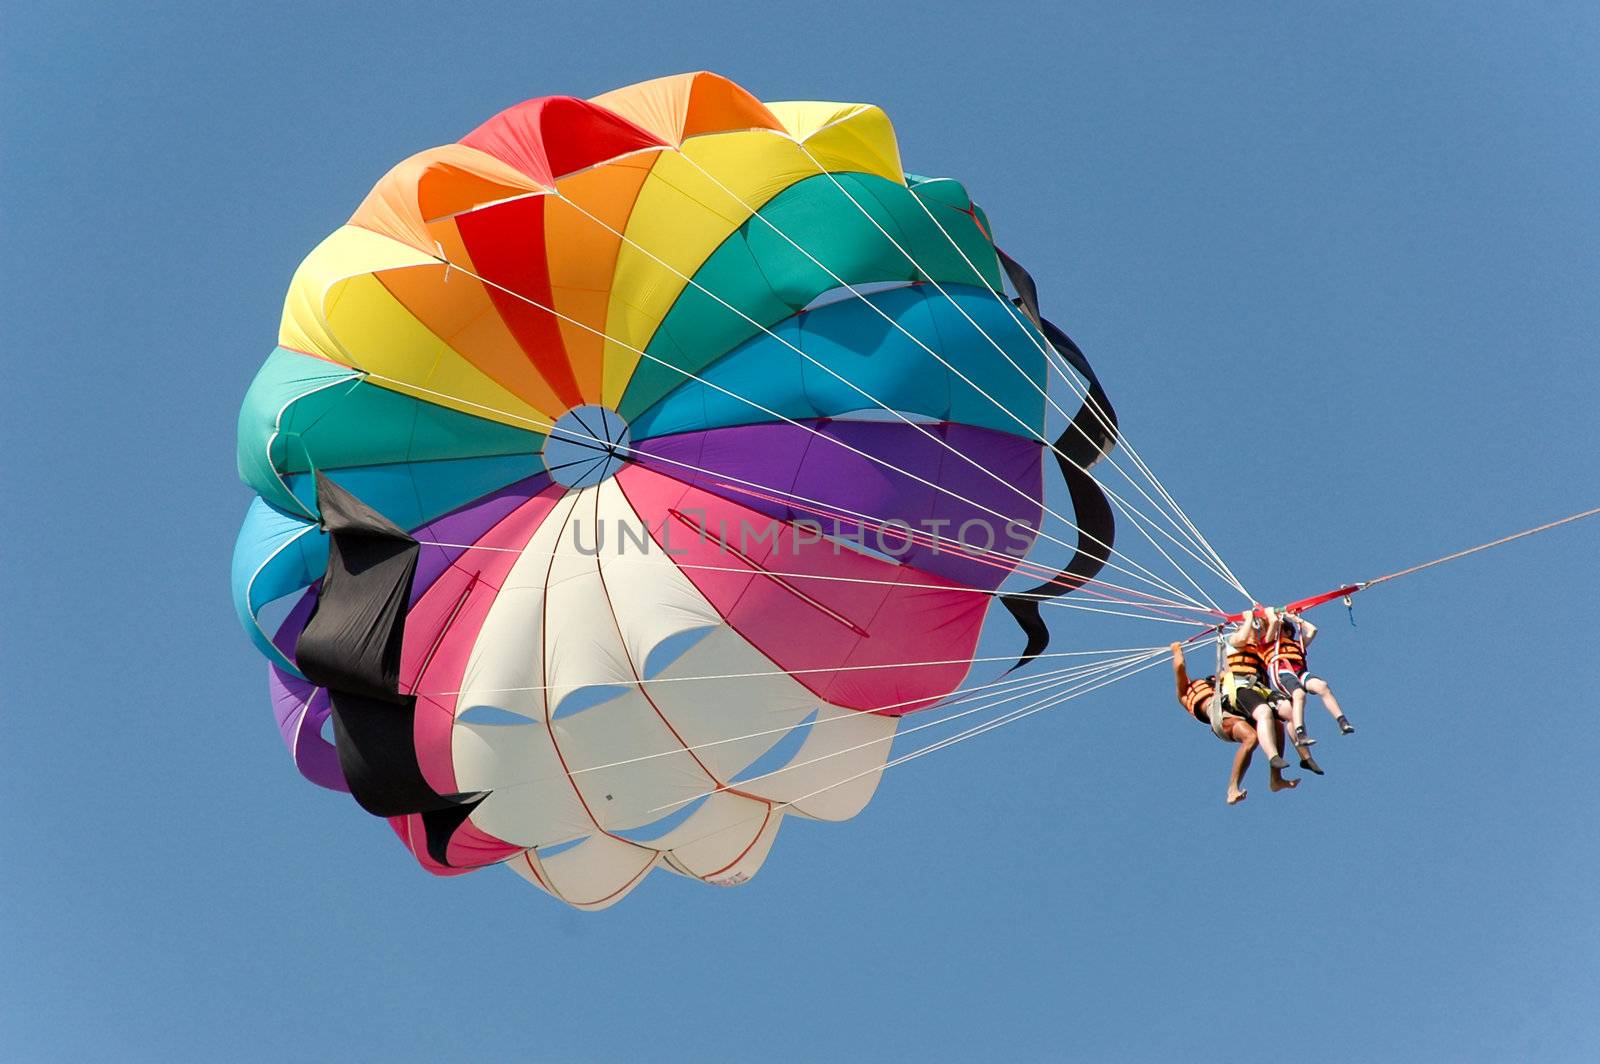 parasailing by cfoto